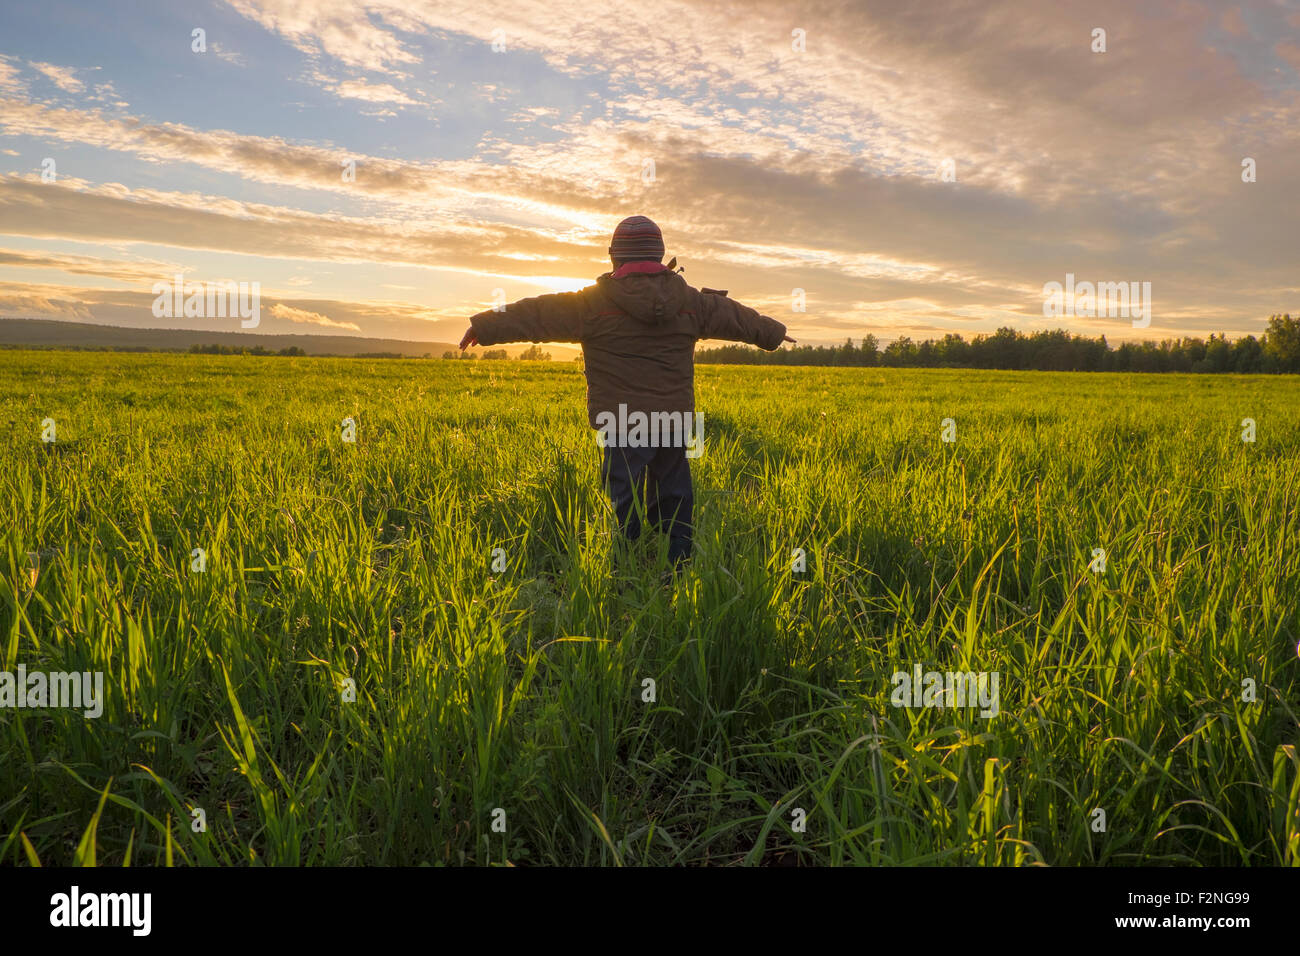 Mari boy admiring sunset in rural field Banque D'Images